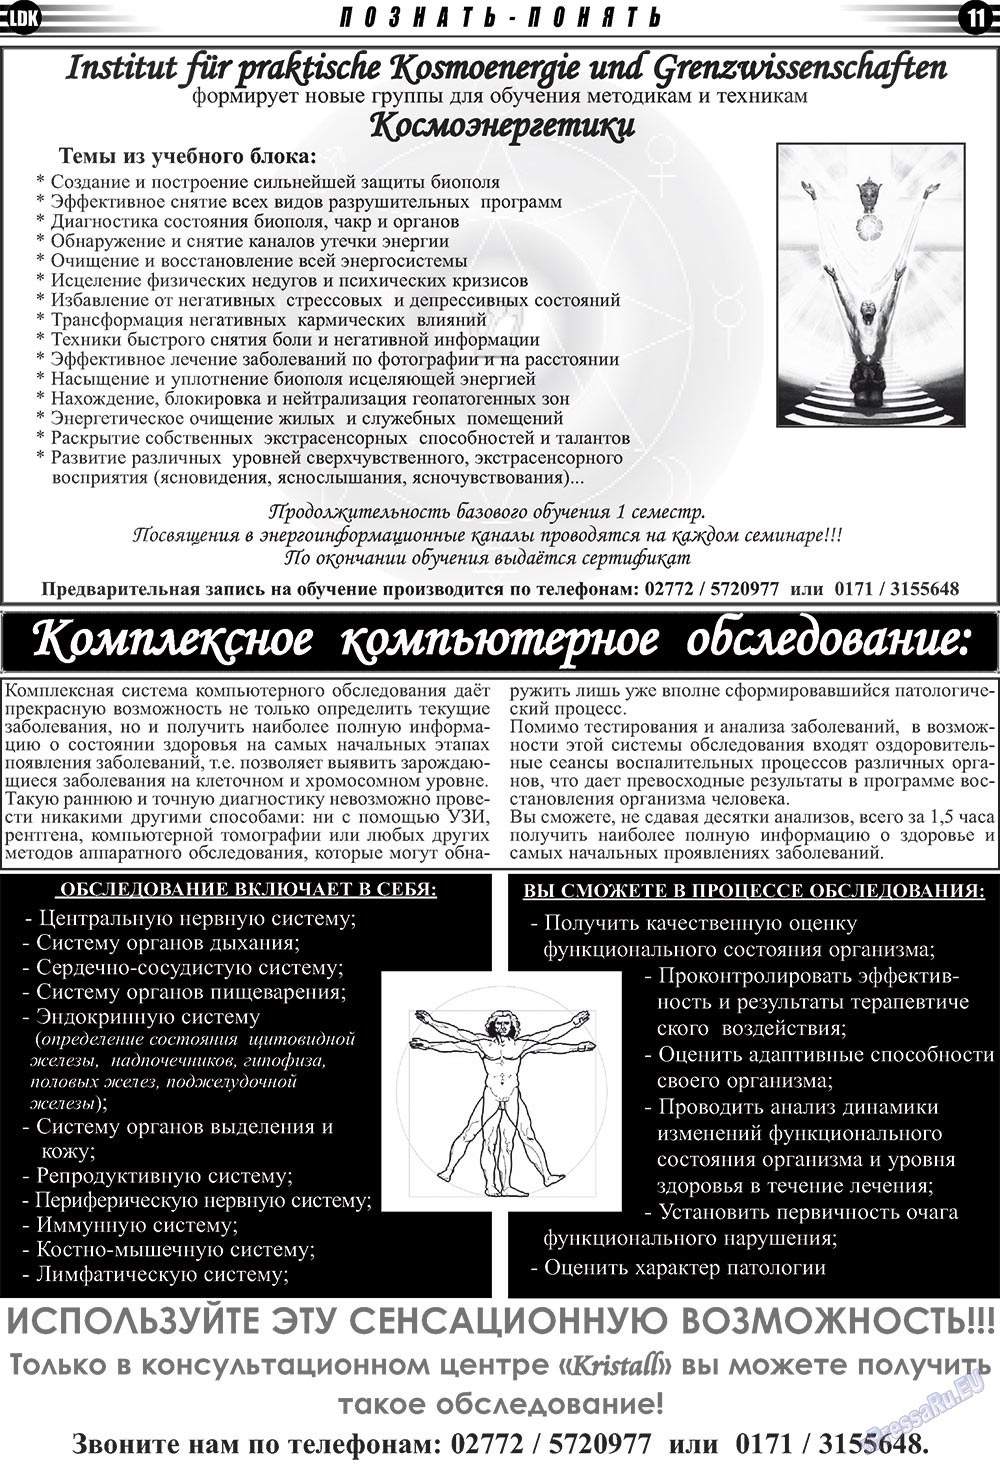 LDK по-русски, газета. 2010 №4 стр.11